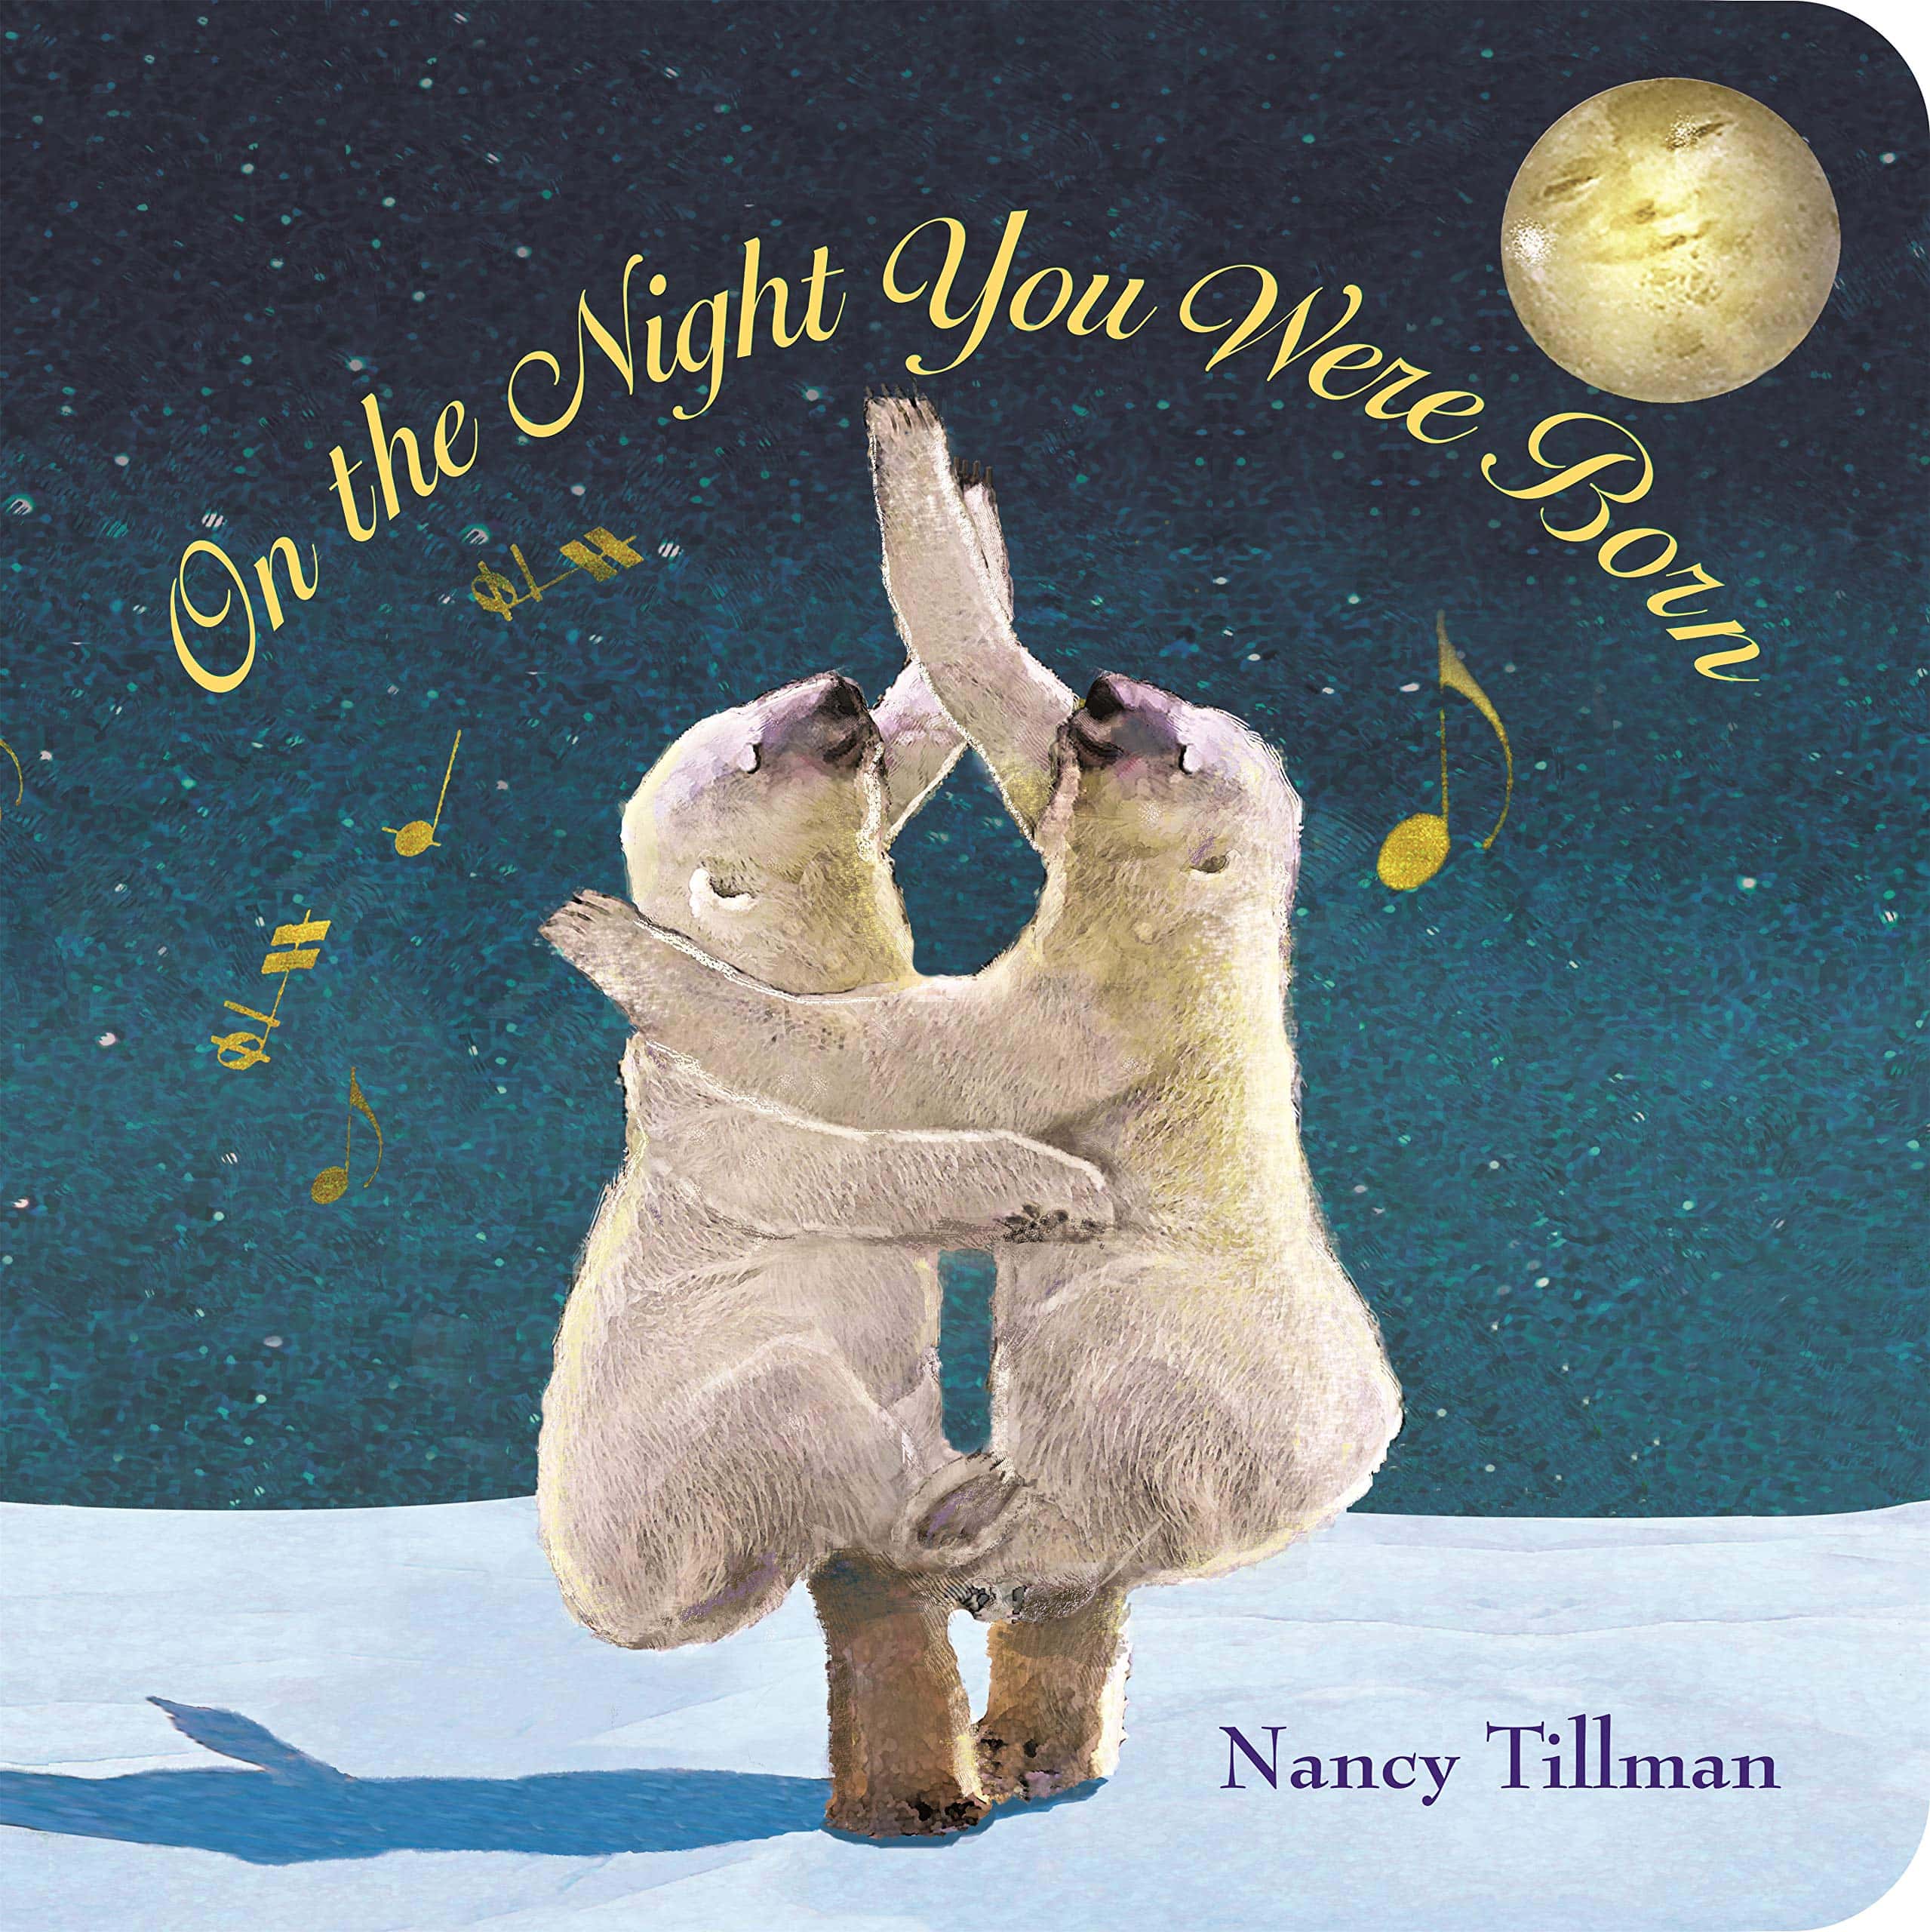 "On the Night You Were Born" by Nancy Tillman